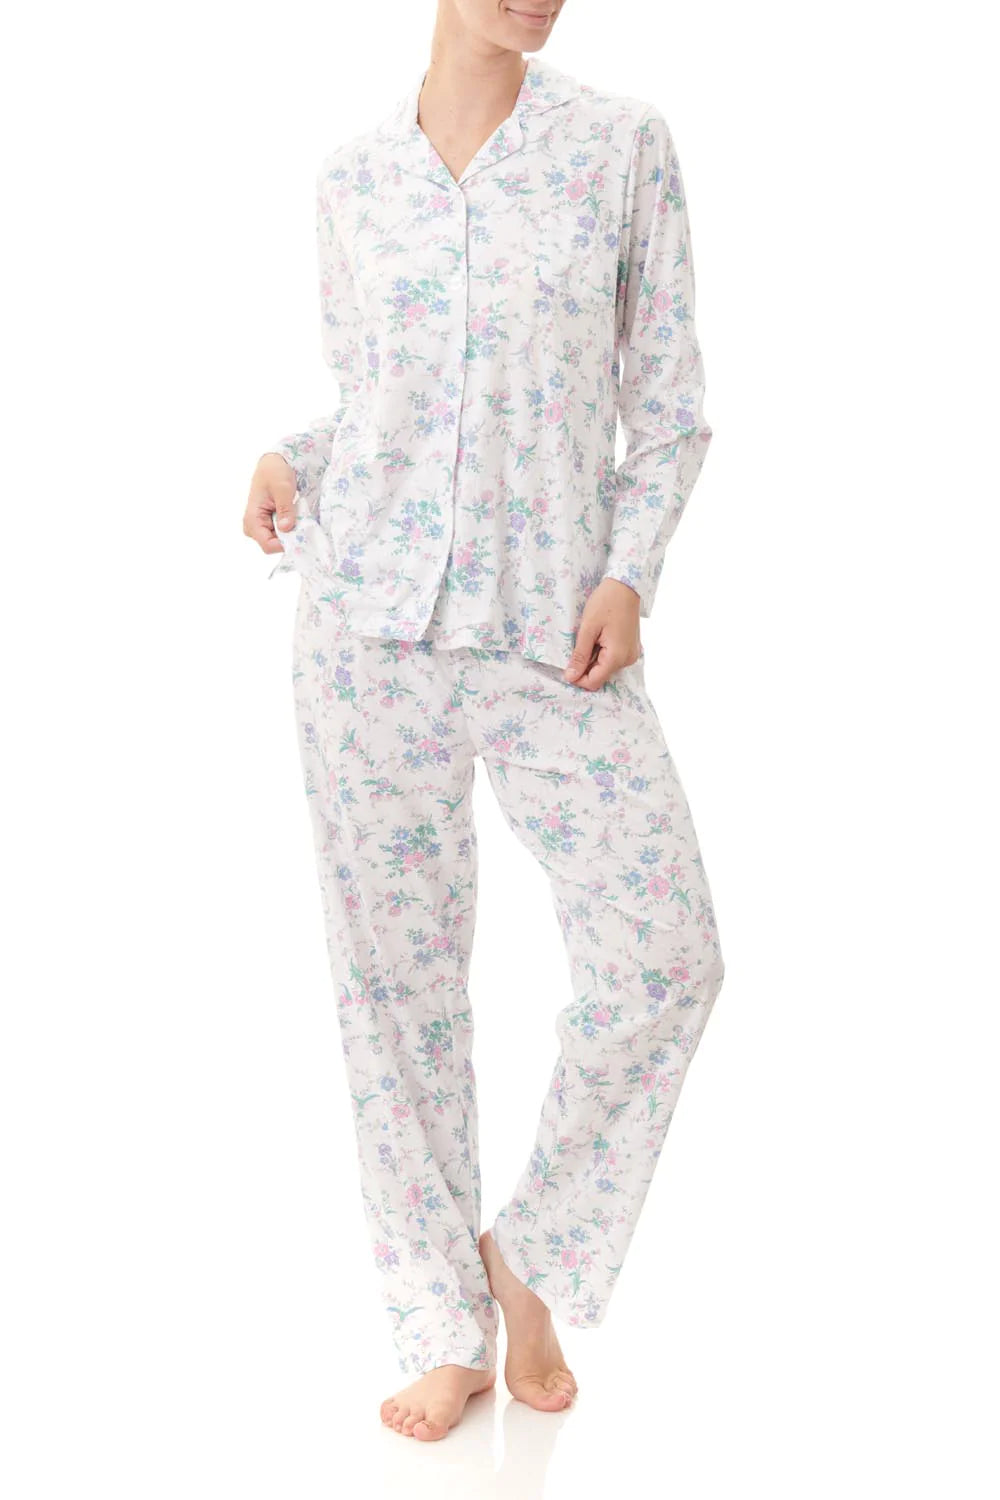 Givoni Leona  Multi Floral Pyjamas 9LP41L